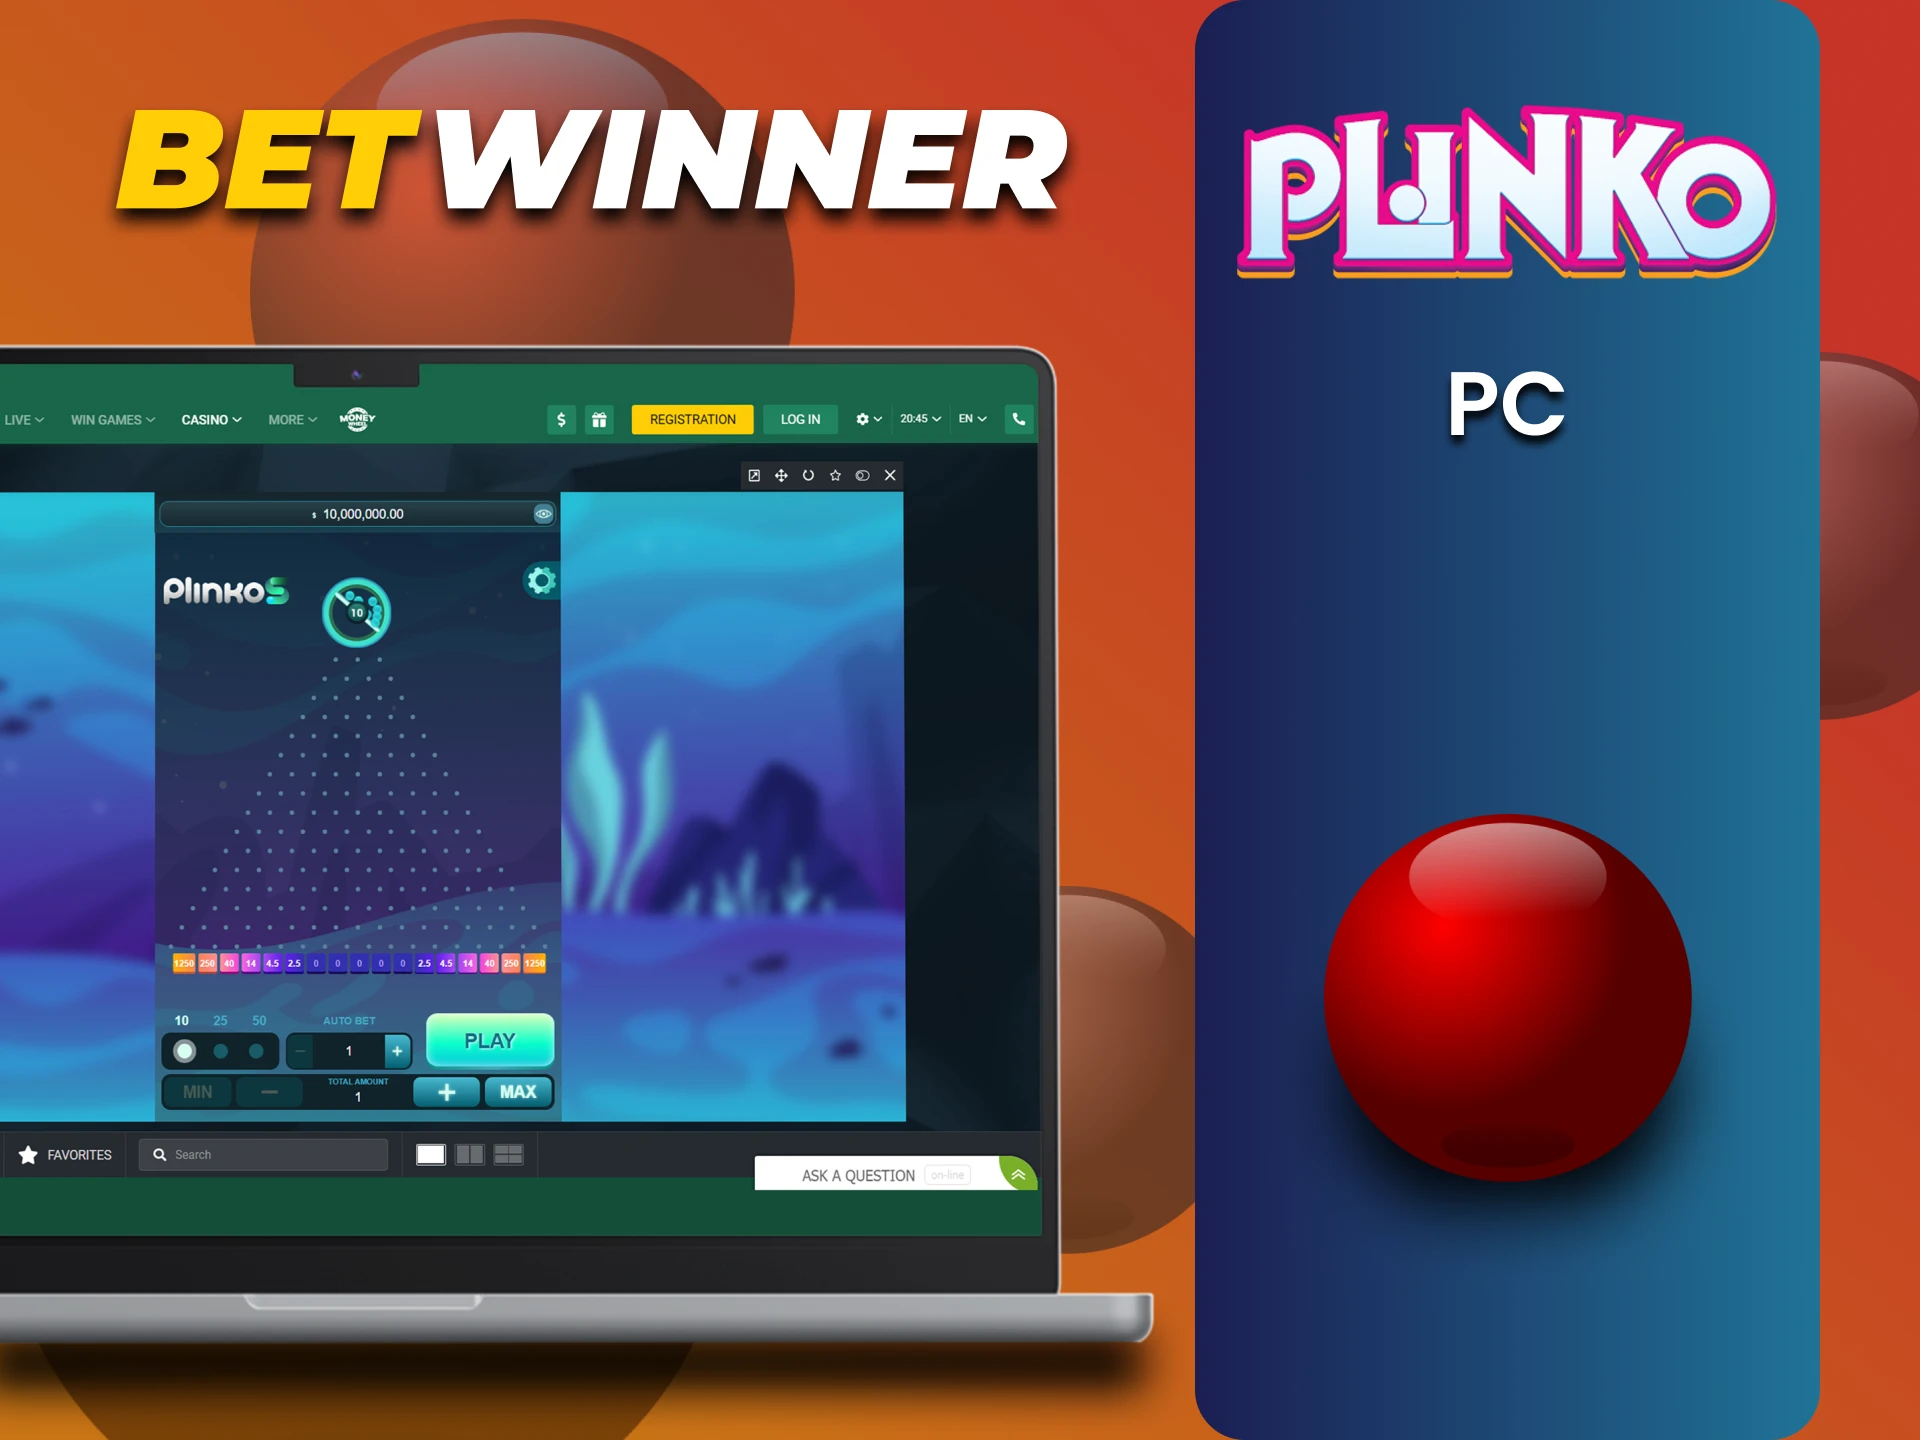 Play Plinko on Betwinner for PC.